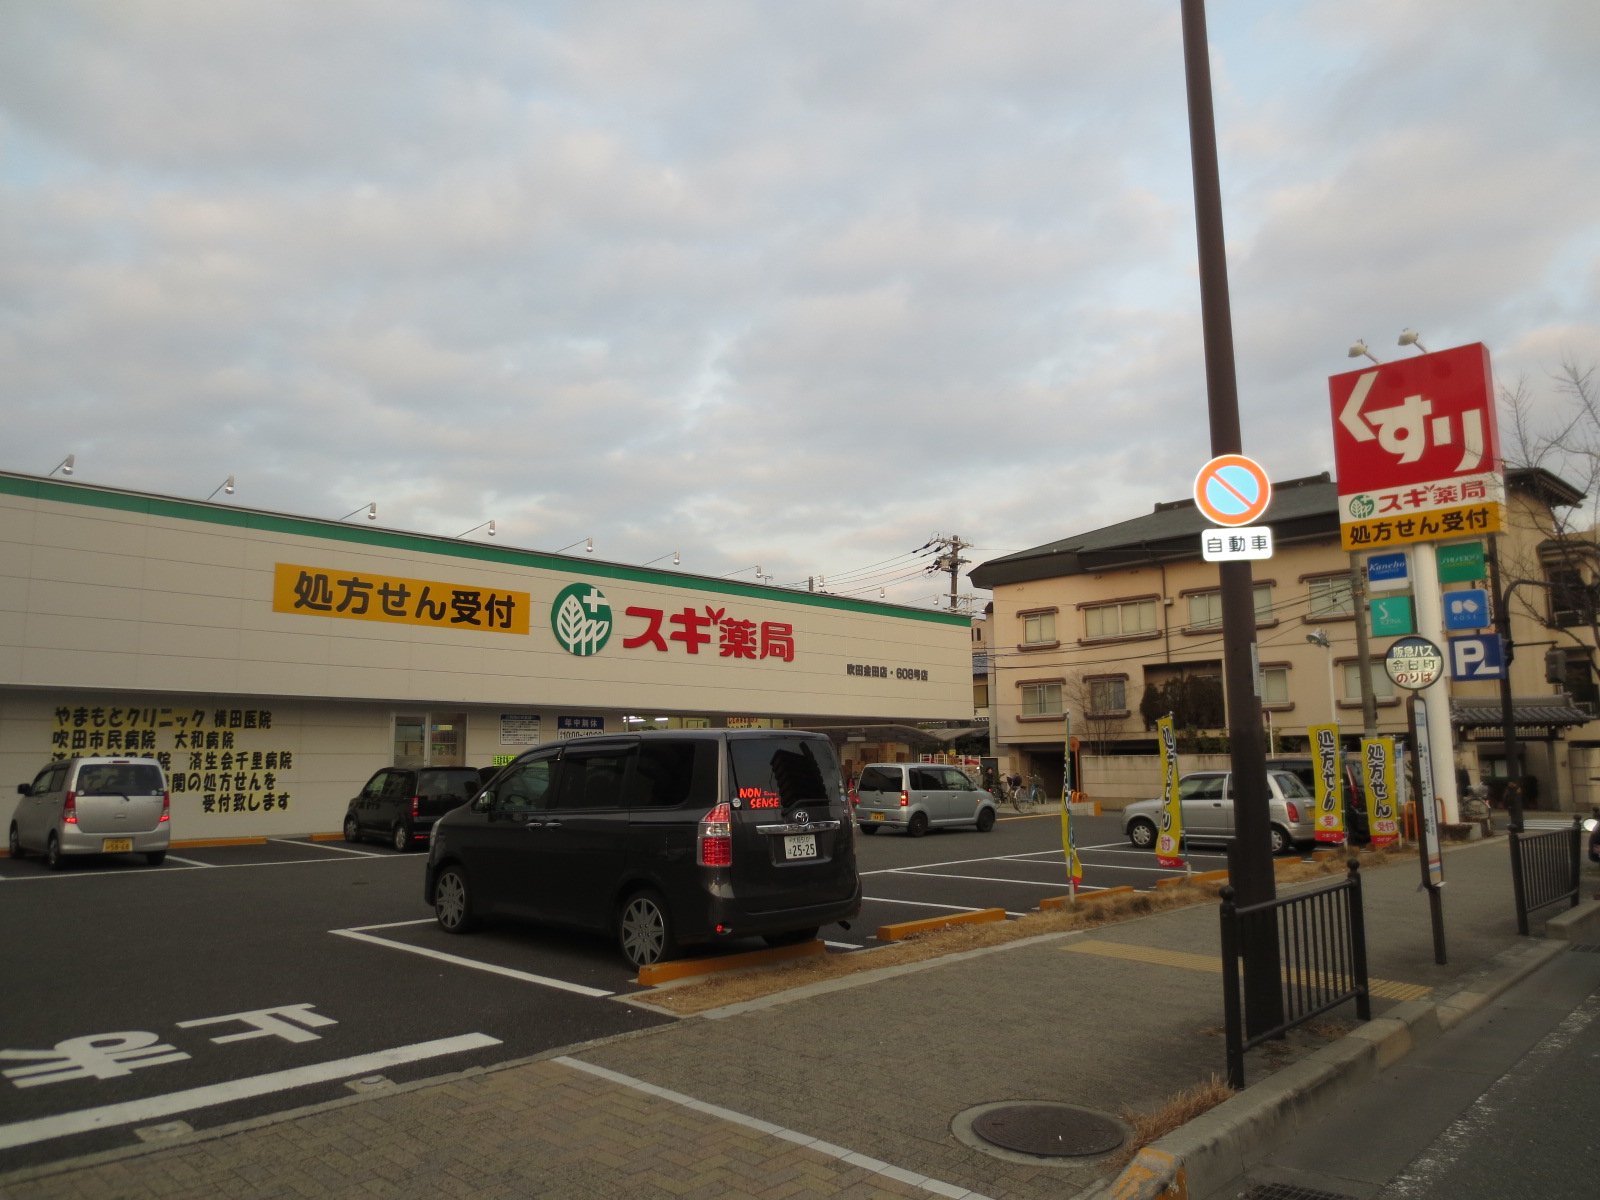 Dorakkusutoa. Cedar pharmacy Suita Kaneda shop 591m until (drugstore)